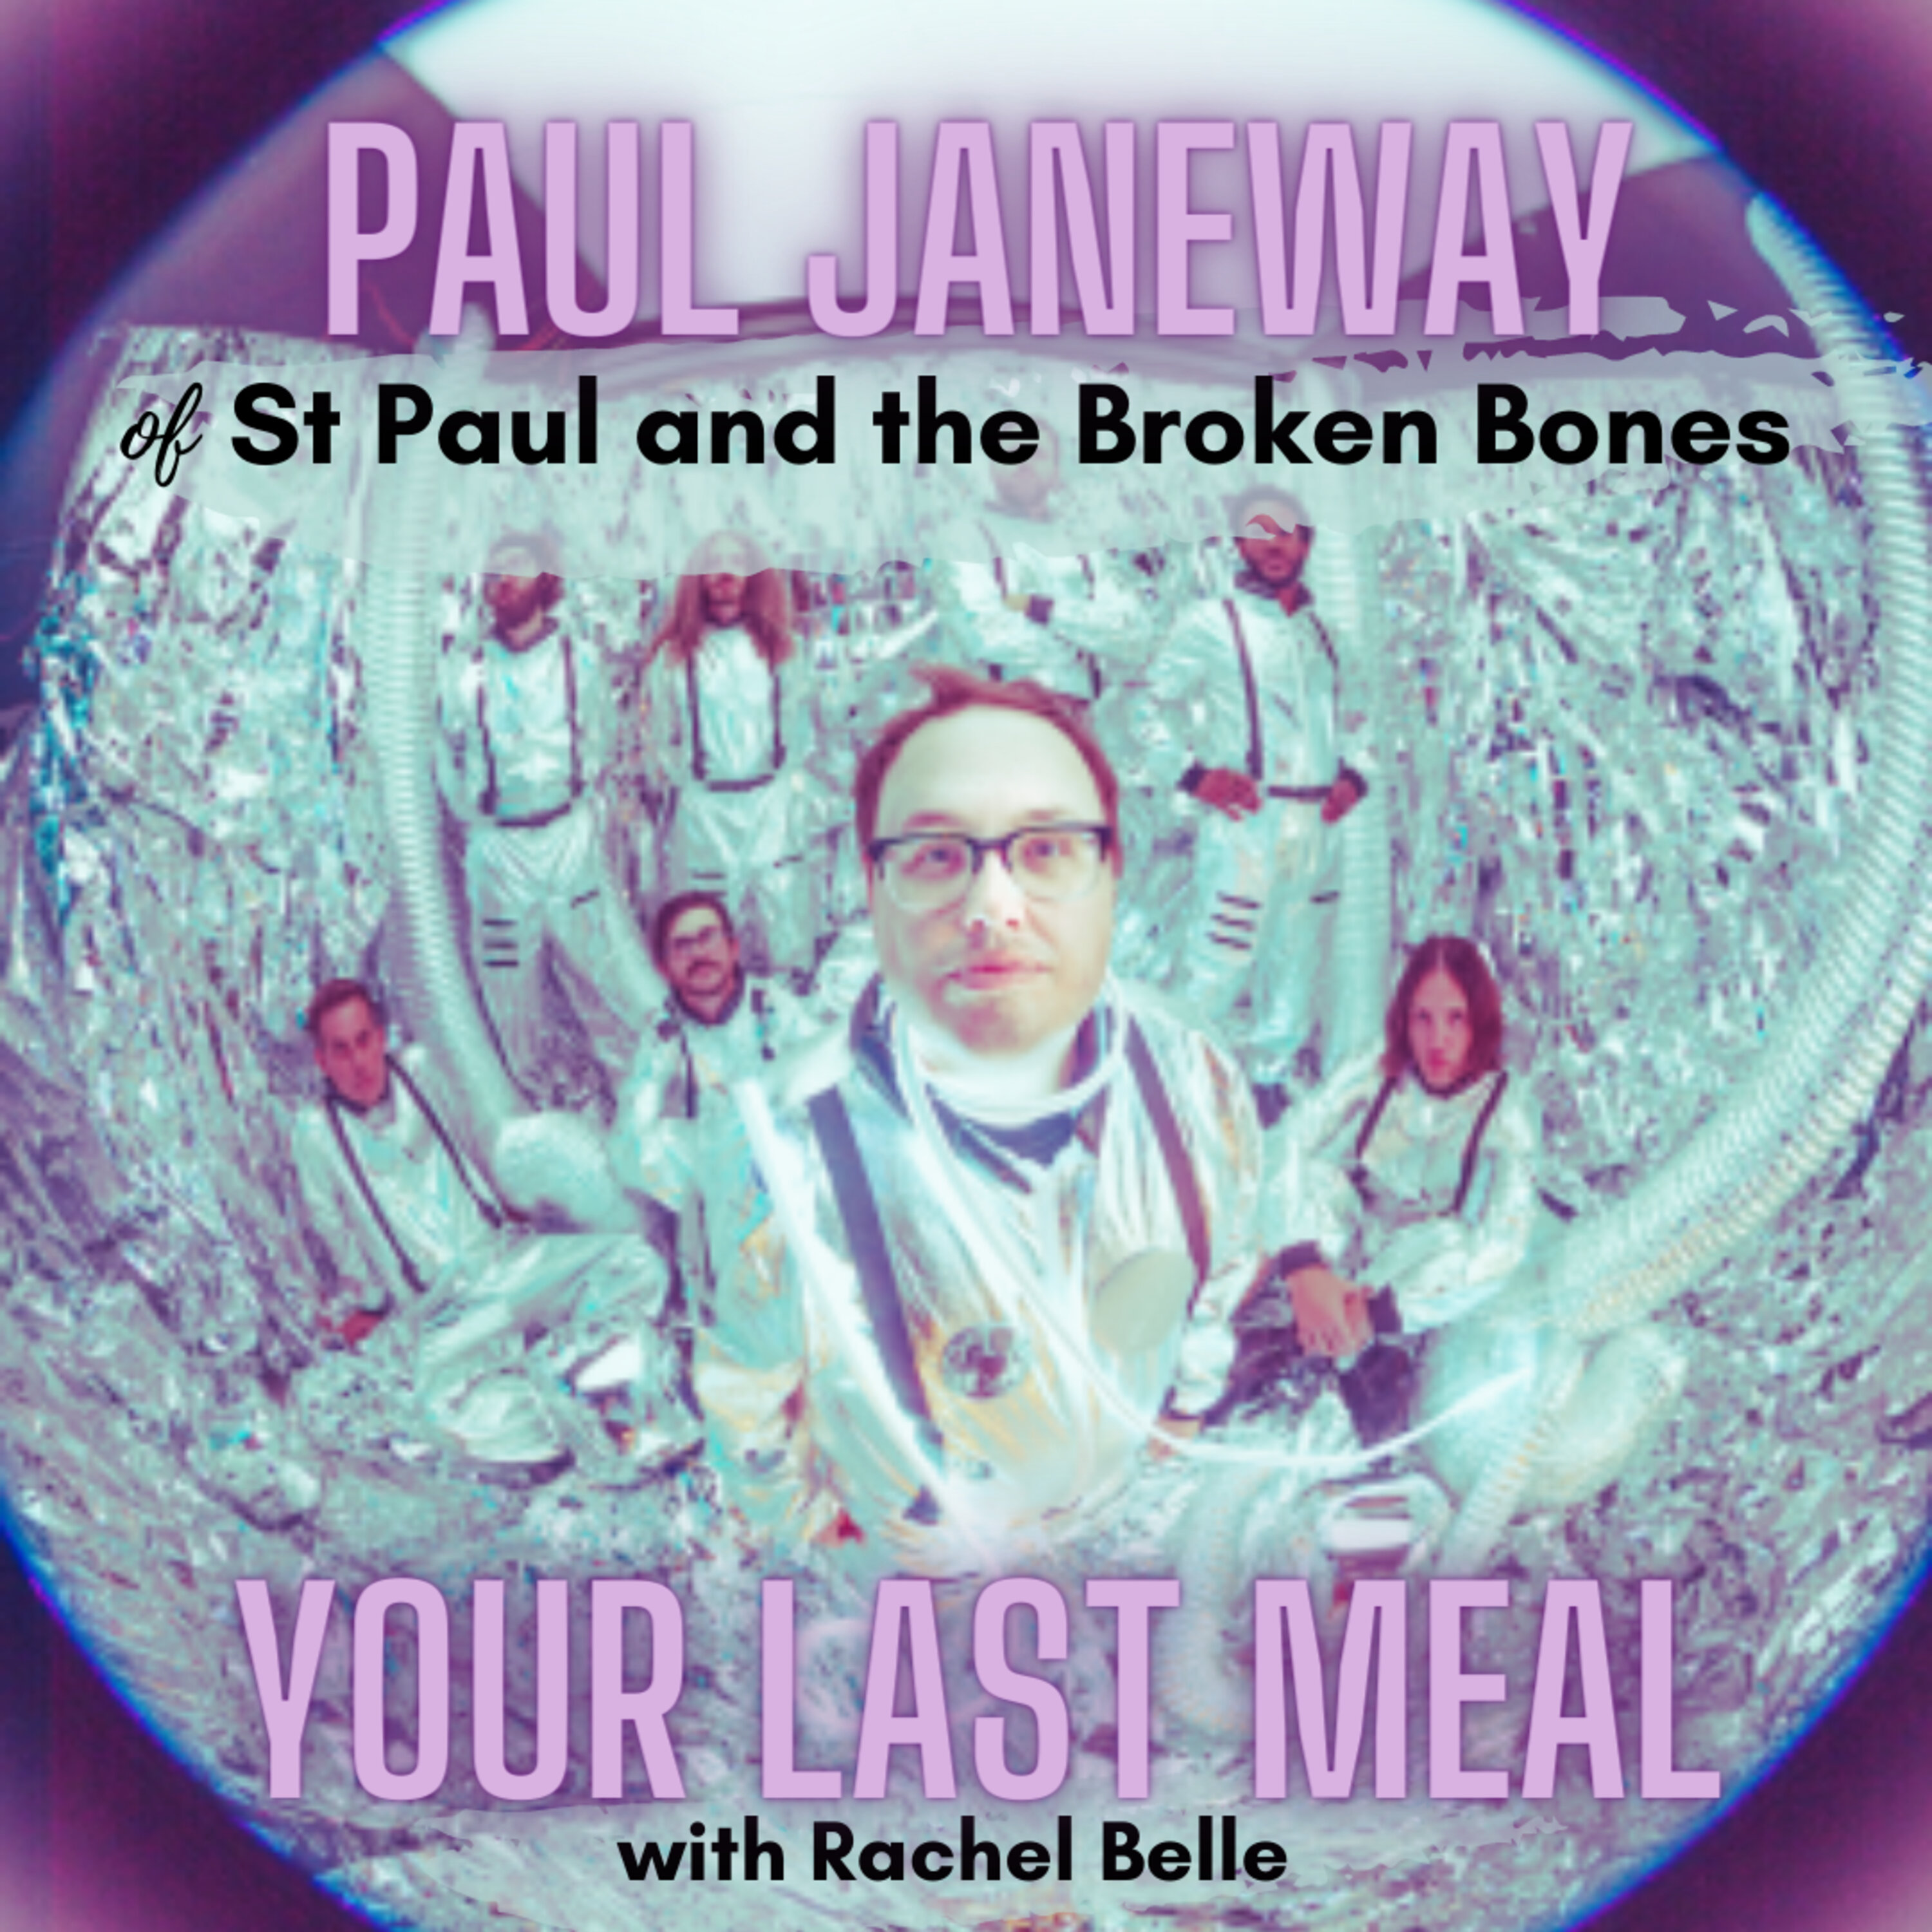 Paul Janeway (St Paul & the Broken Bones): Kraft Macaroni & Cheese